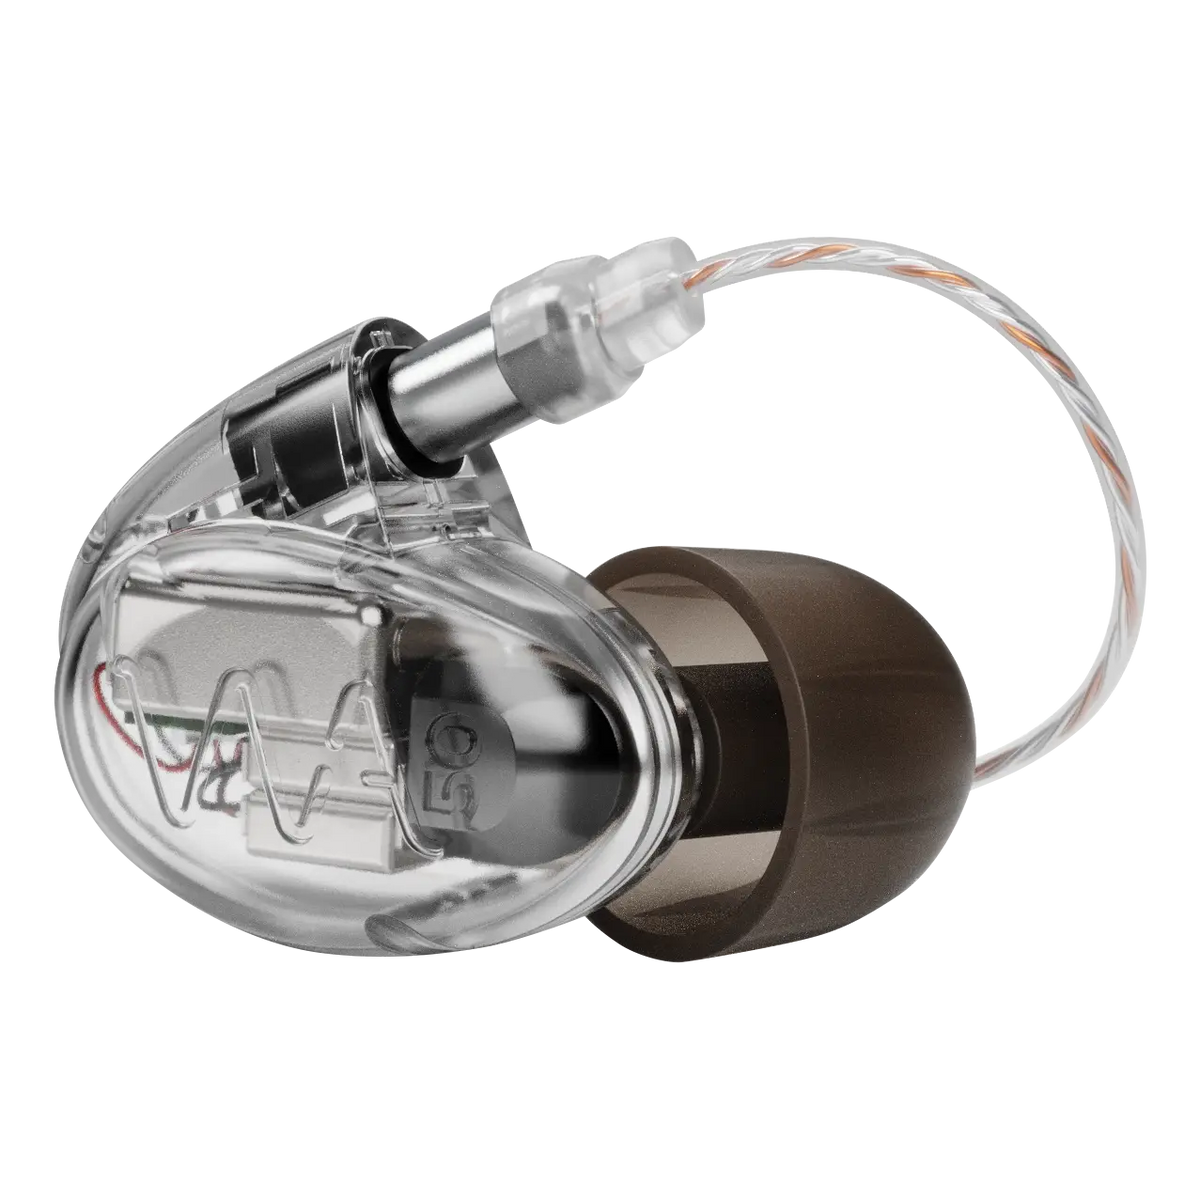 Westone Audio Pro X50 Professional Five Drivers IEM Earphones with Linum BaX T2 Detachable Cable - Refurbished